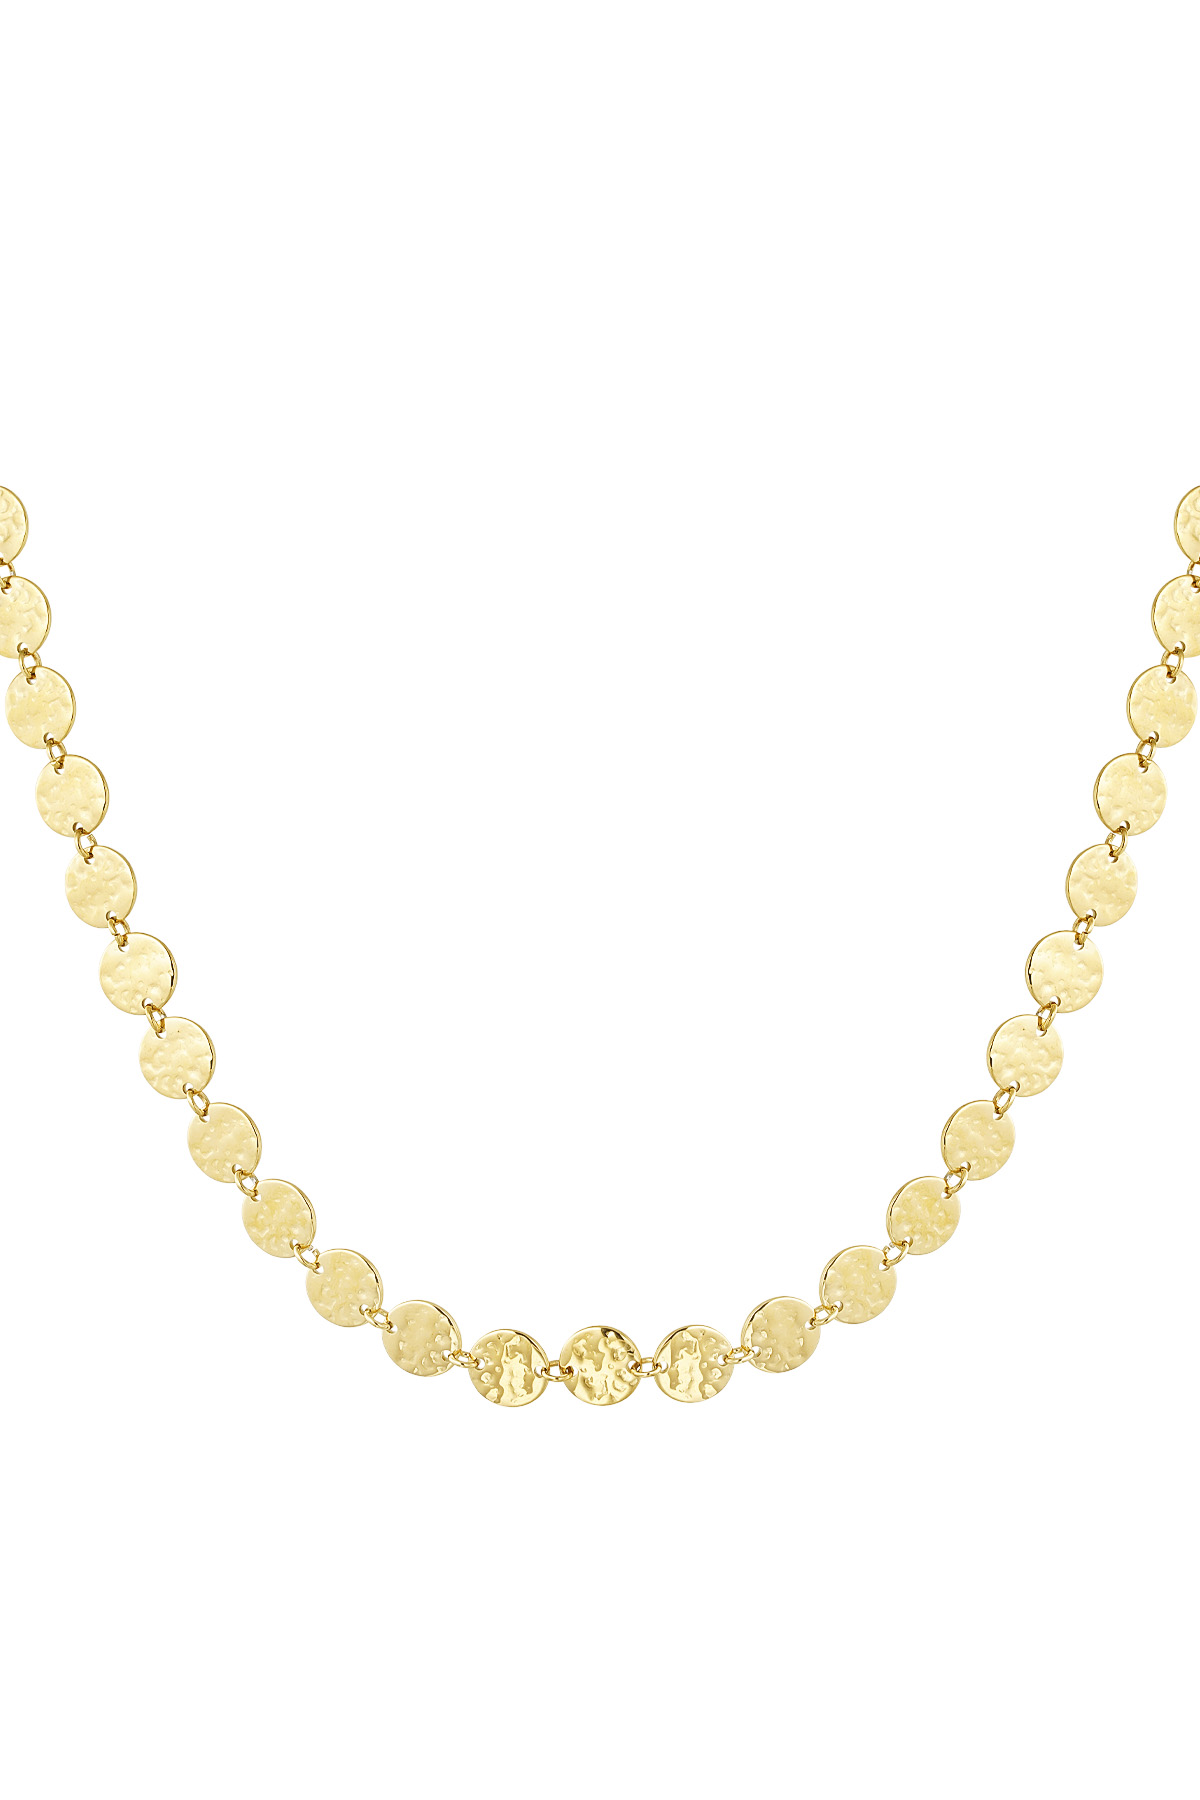 Round vintage necklace - gold